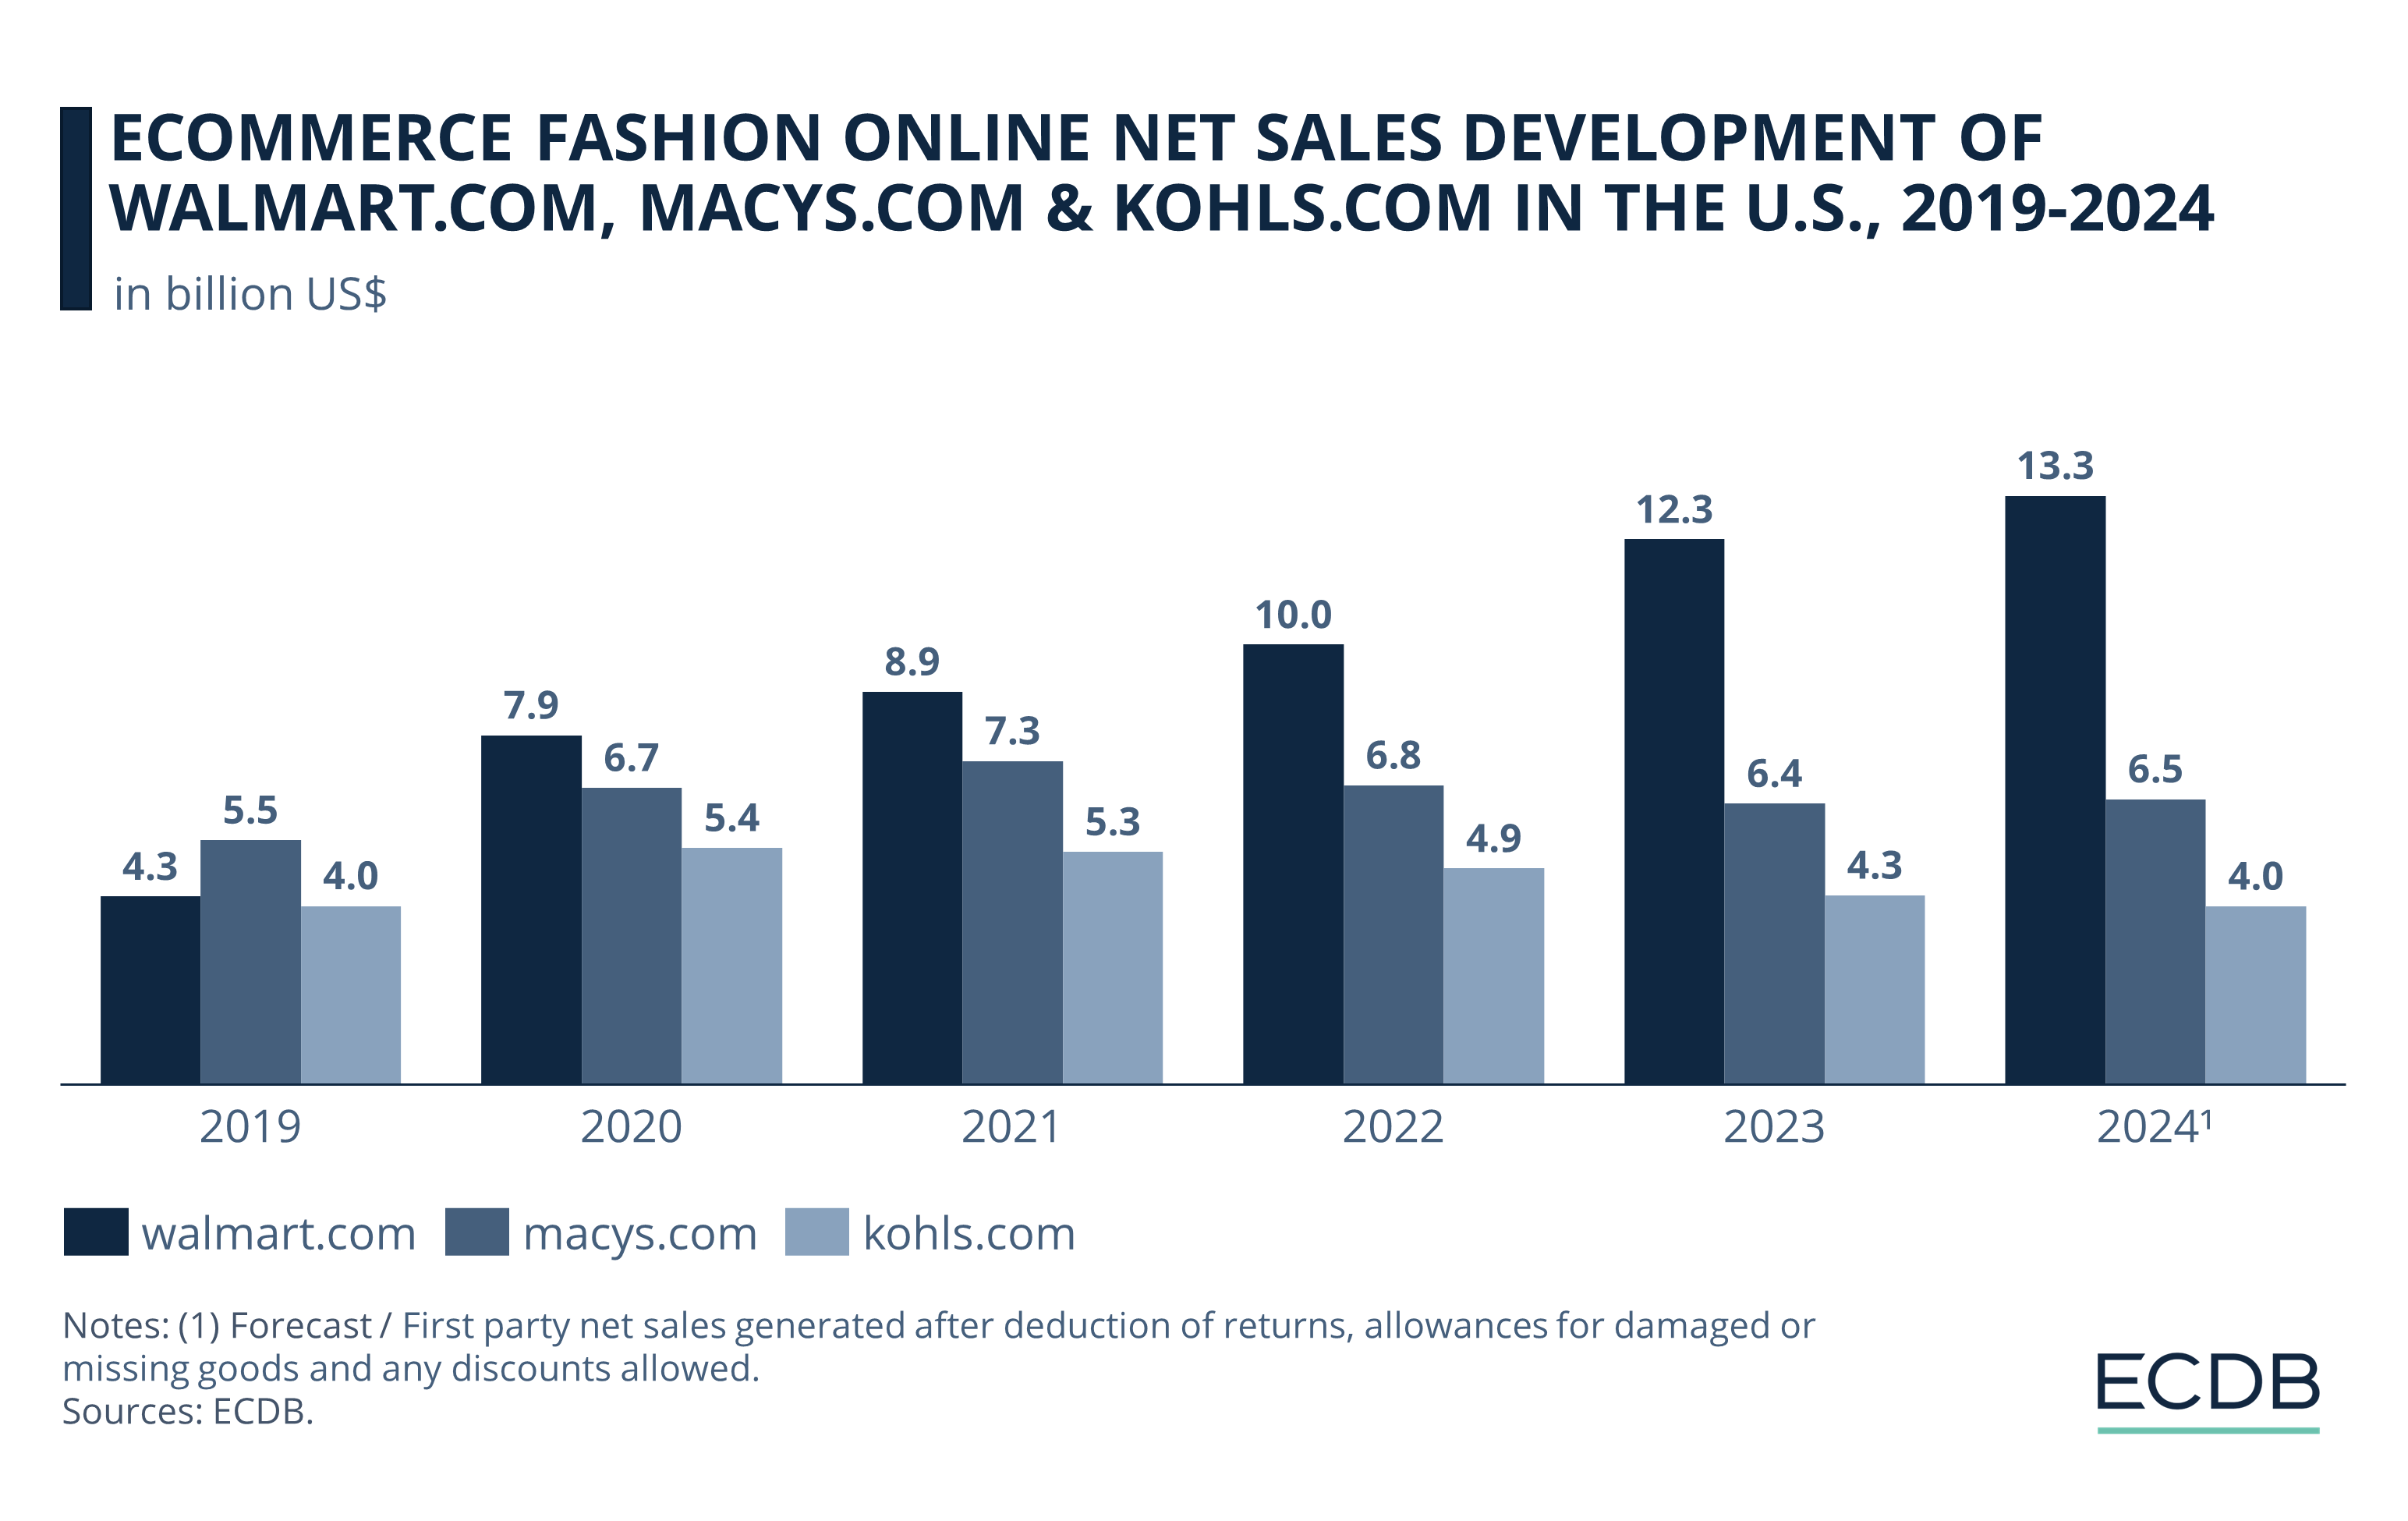 eCommerce Net Sales Development of Walmart.com, Macys.com & Kohls.com in U.S., 2019-2024